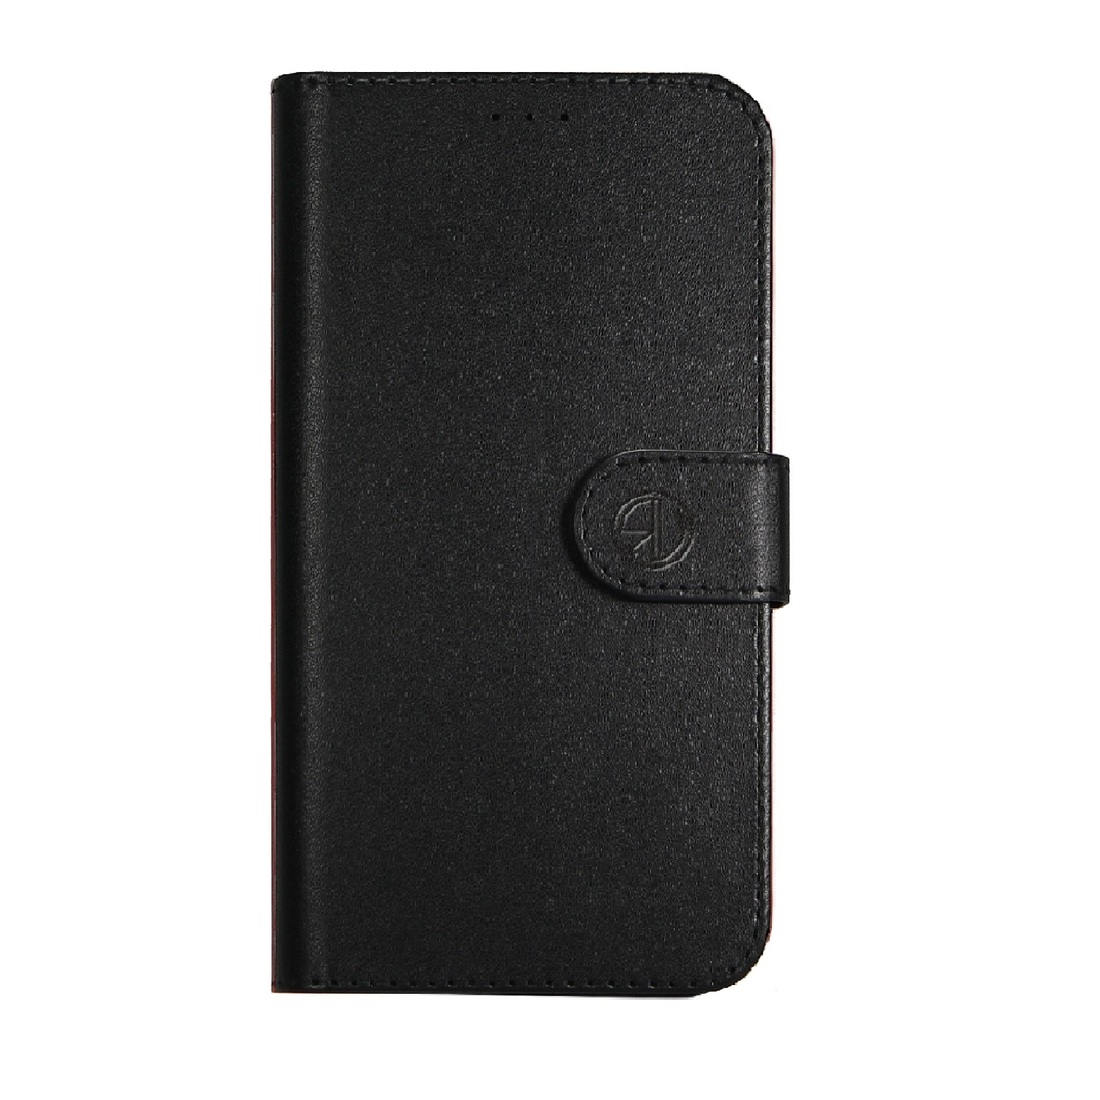 Super Wallet Case iPhone 6S Zwart